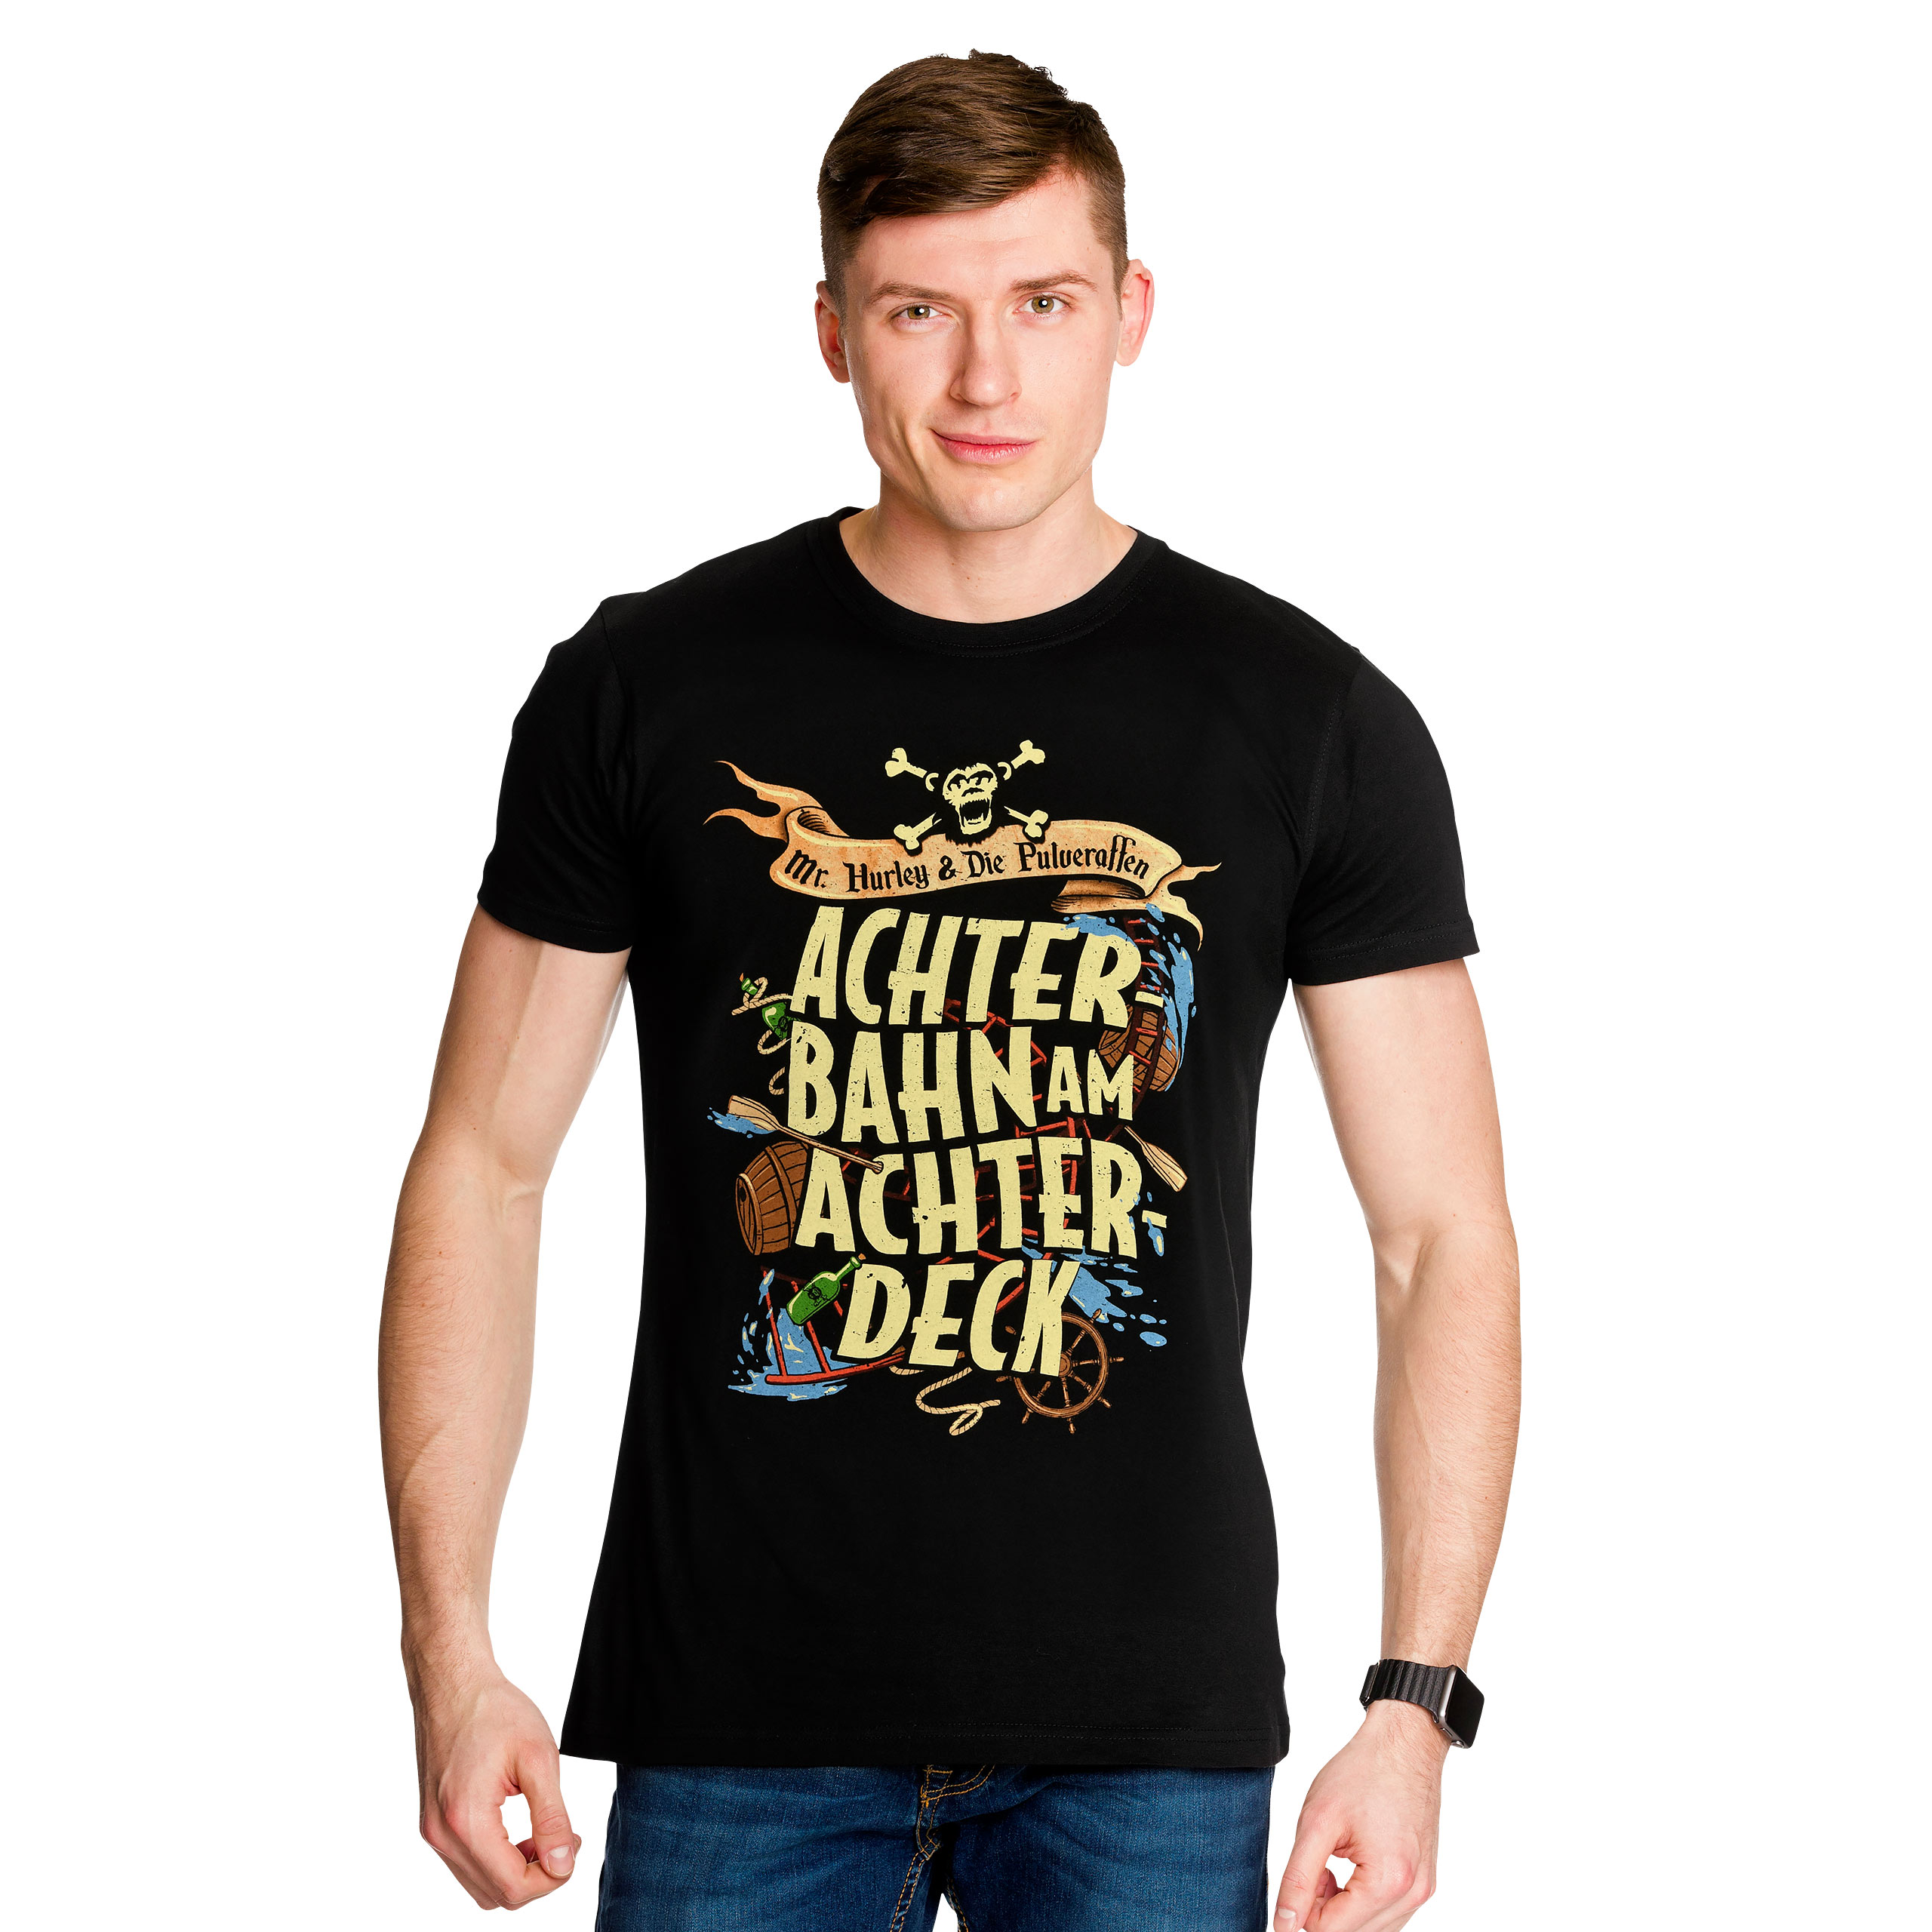 Mr. Hurley & The Powder Monkeys - Roller Coaster T-Shirt Black